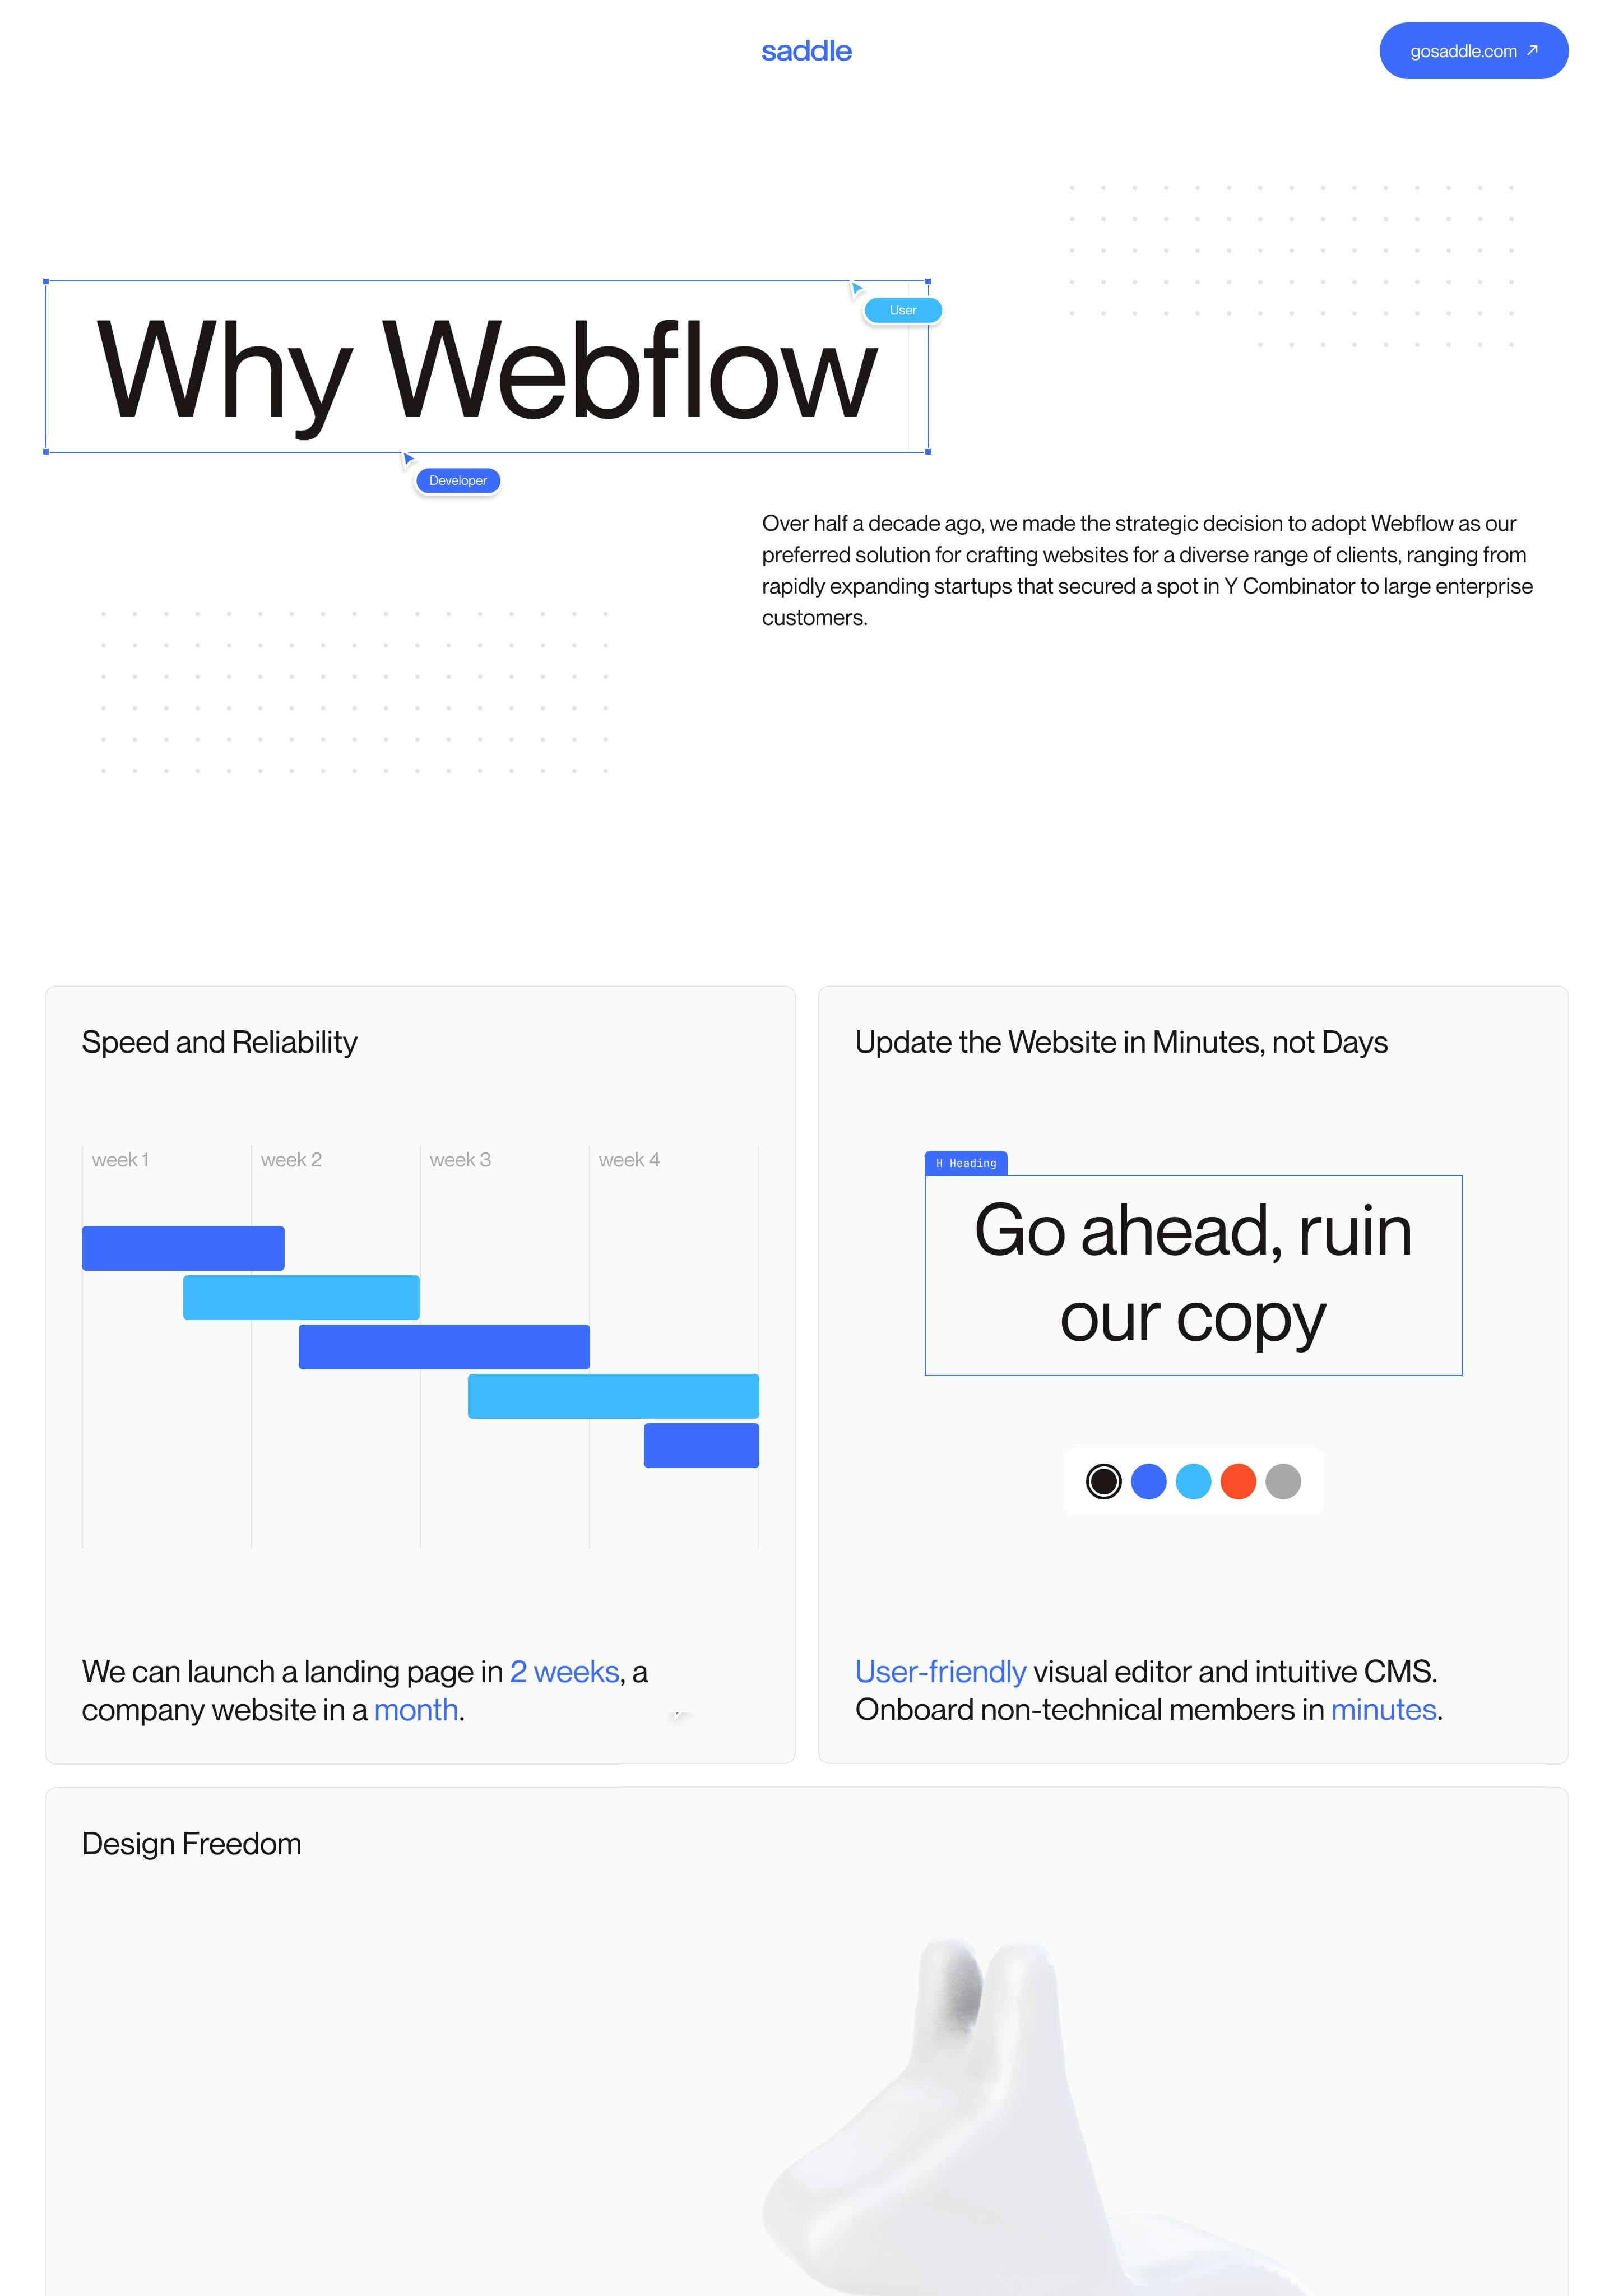 Saddle – Why Webflow Website Screenshot